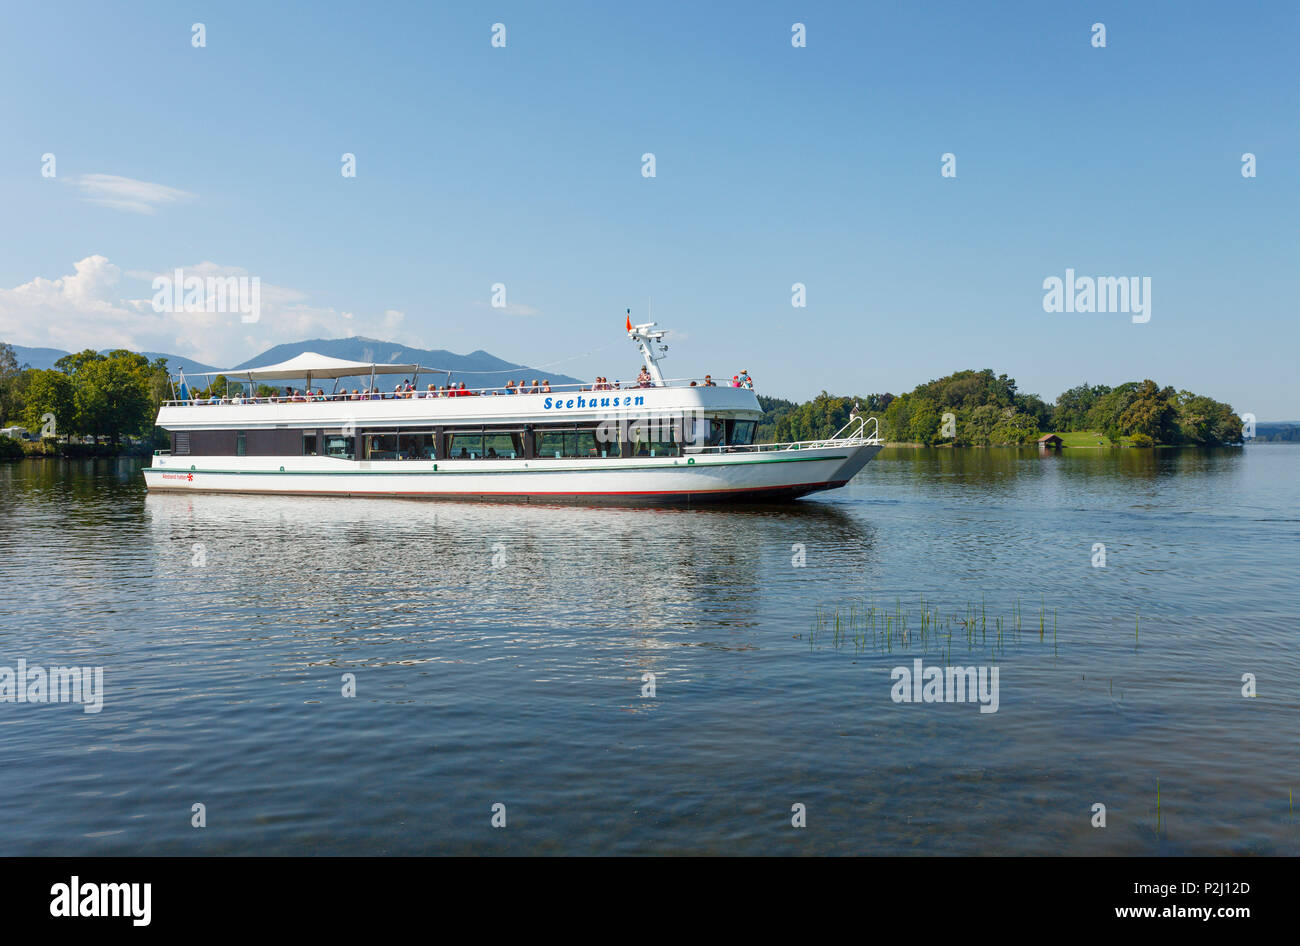 Barco en el lago Staffelsee, Woerth isla, Seehausen am Staffelsee, cerca de Murnau, Tierra Azul, distrito de Garmisch-Partenkirchen, Bavari Foto de stock